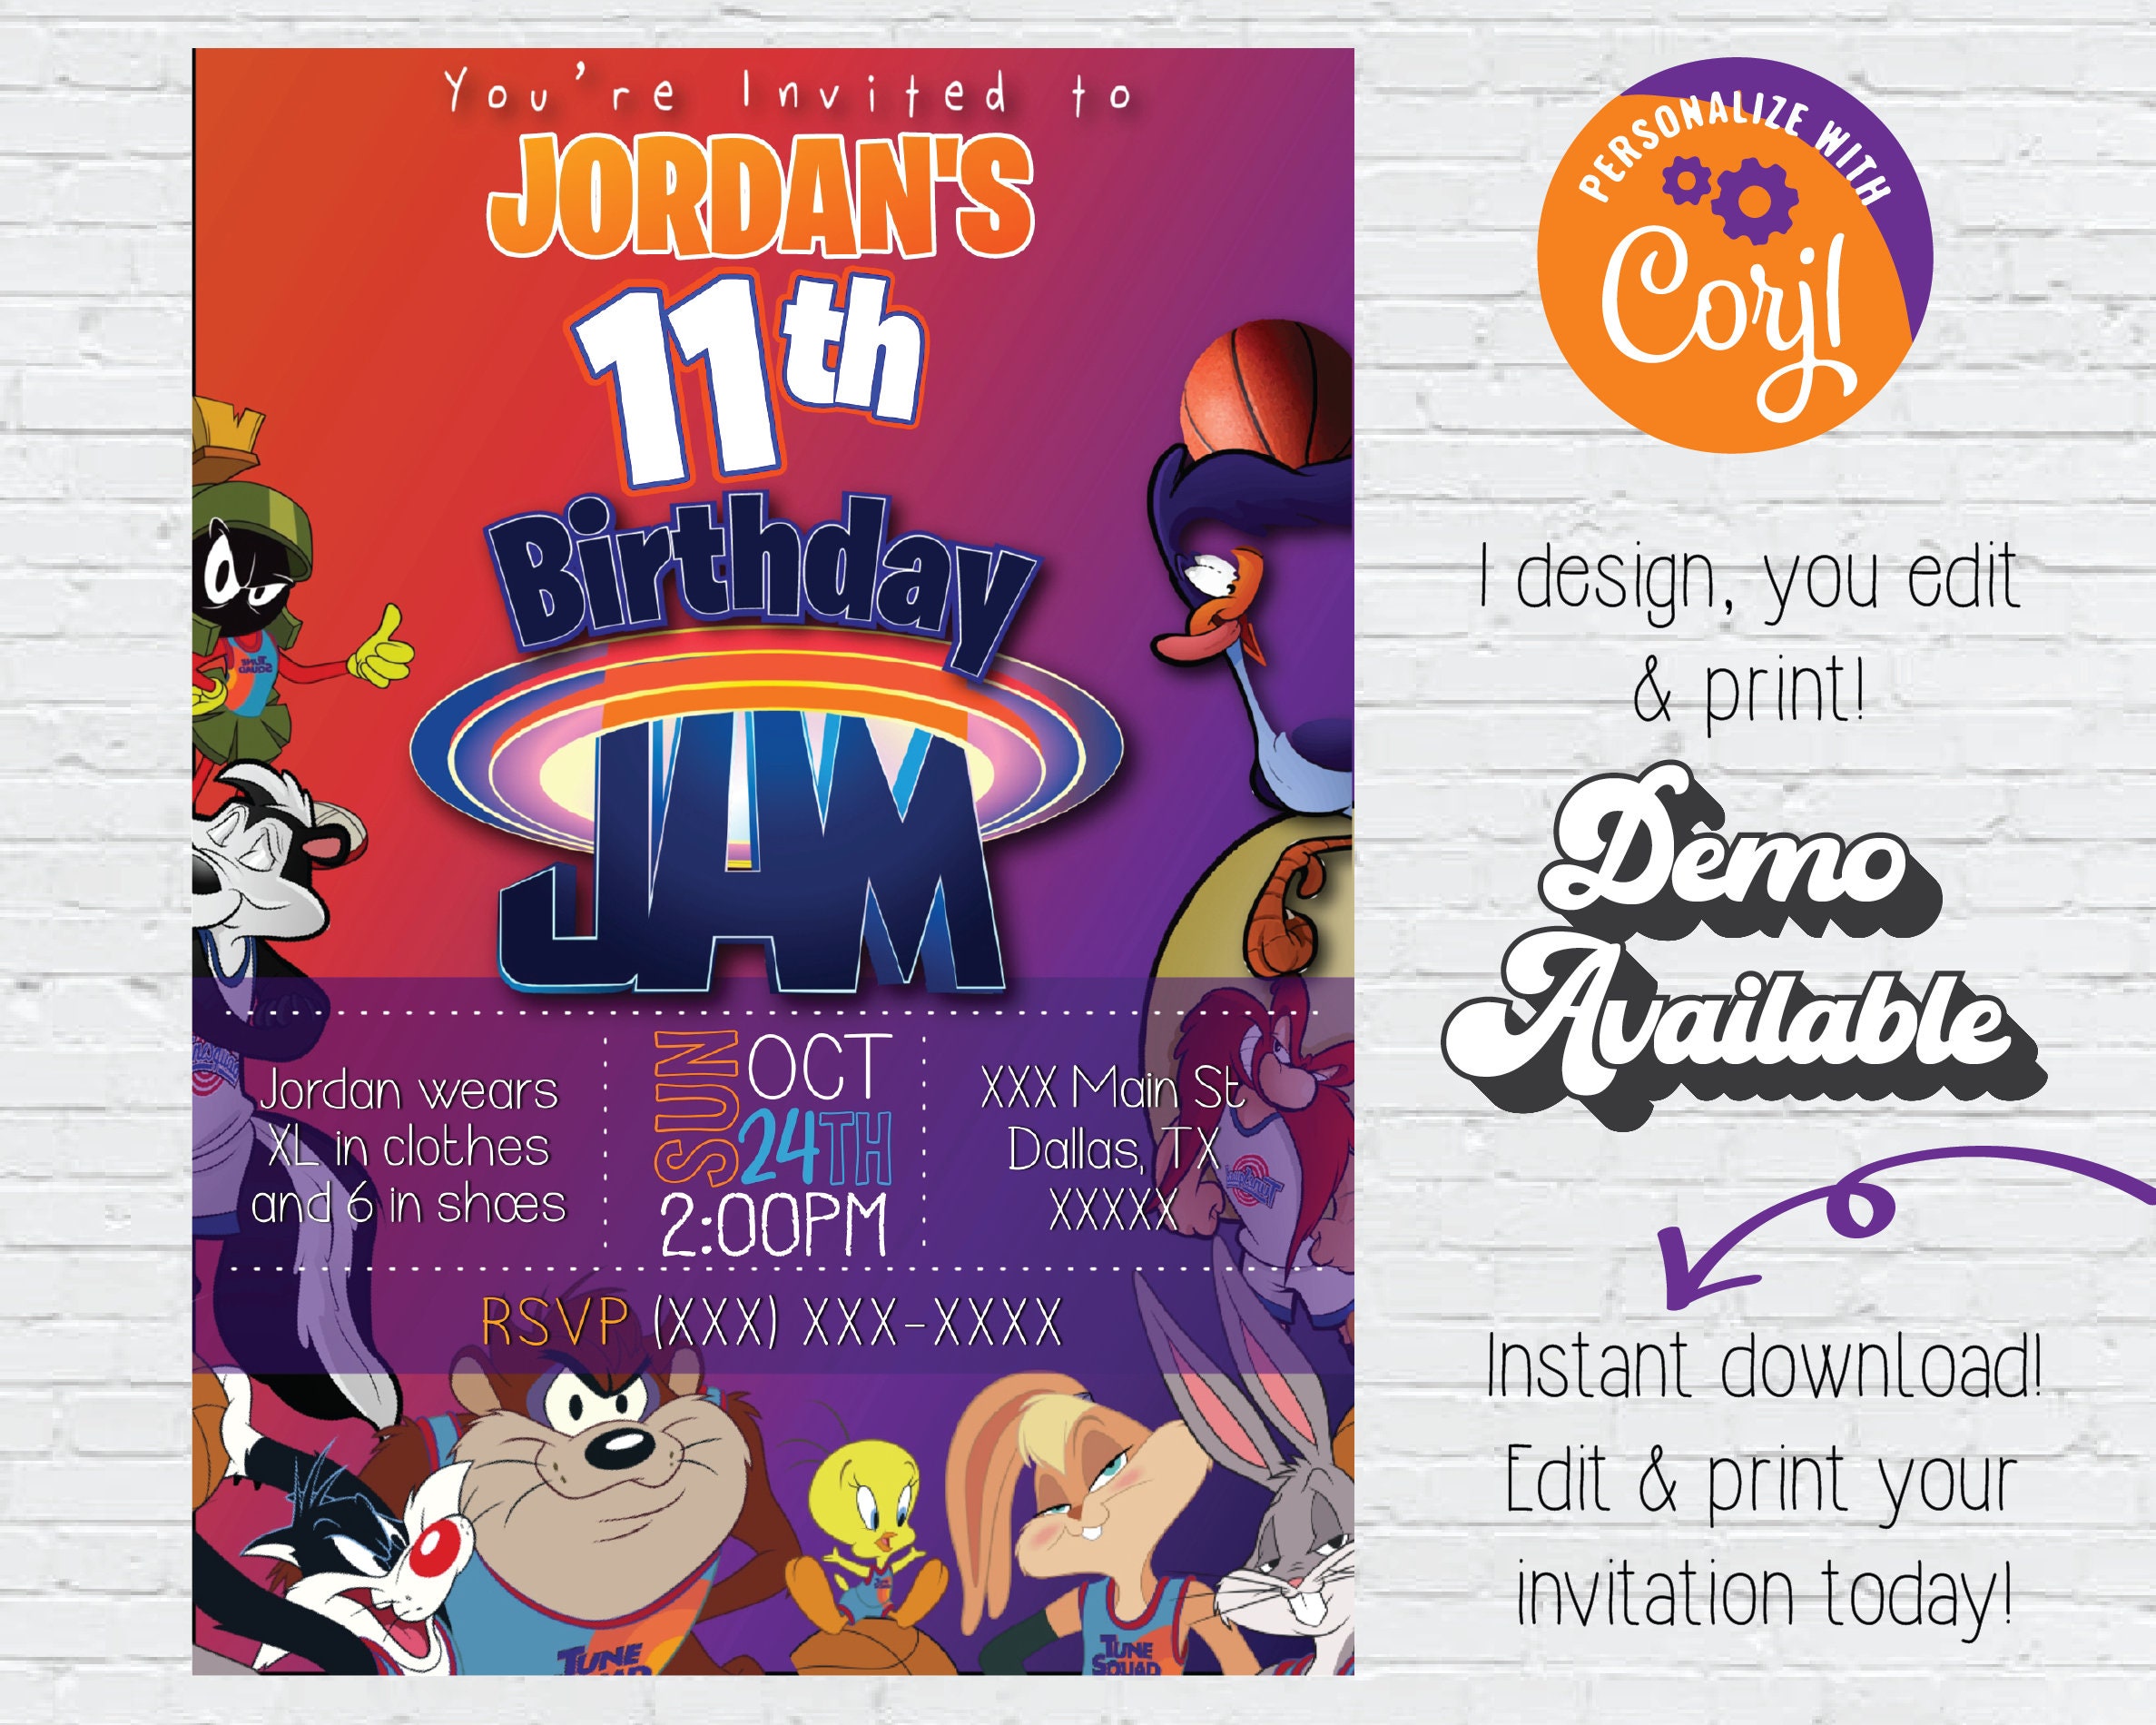 Space Jam 2 Animated invitation card Customizable Template DIY